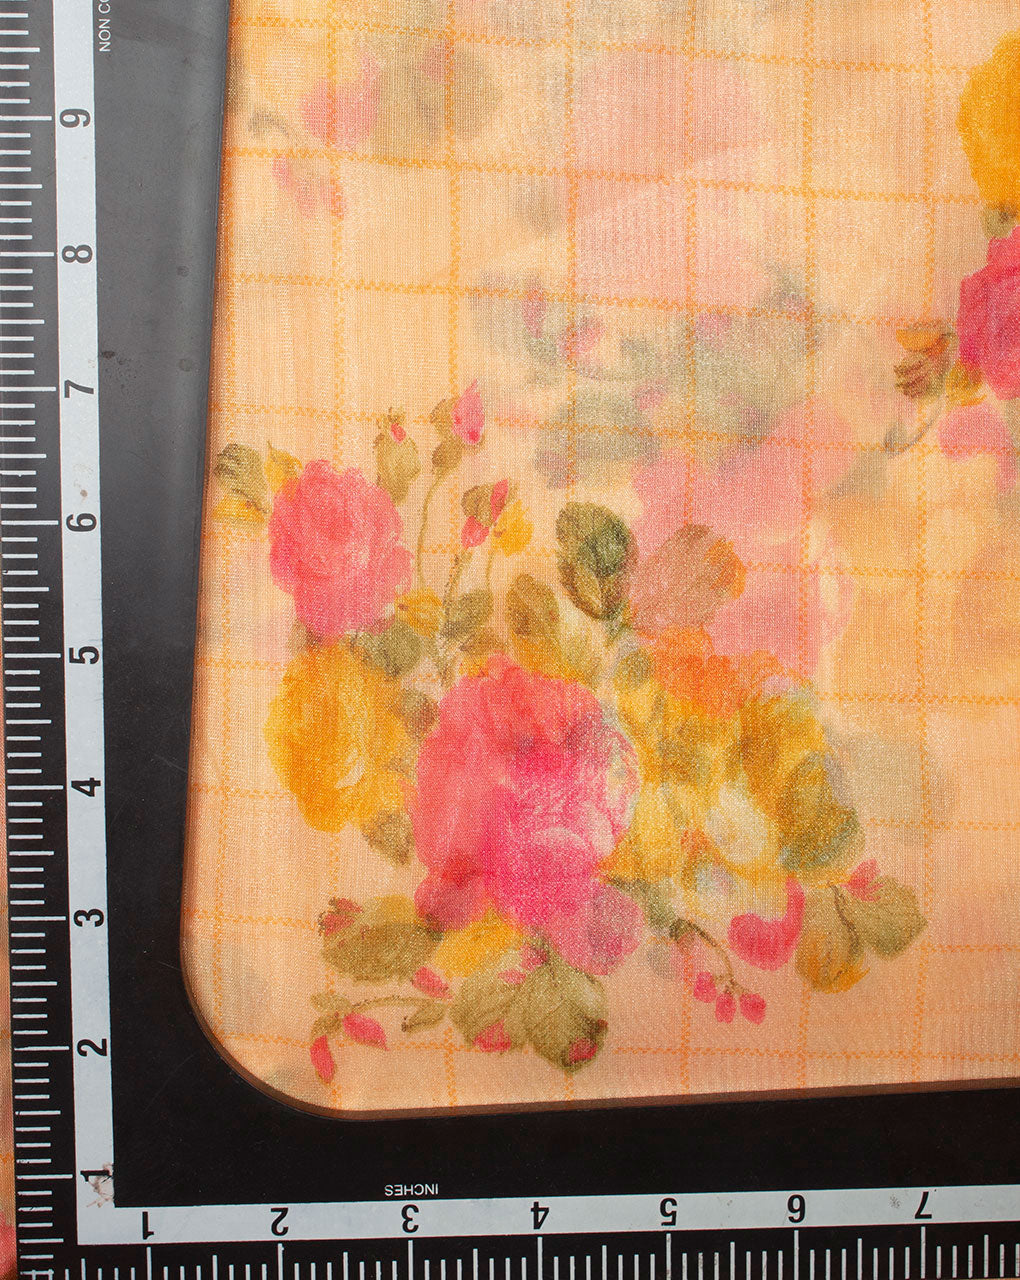 Peach Fuchsia Floral Pattern Screen Print Organza Tissue Fabric - Fabriclore.com